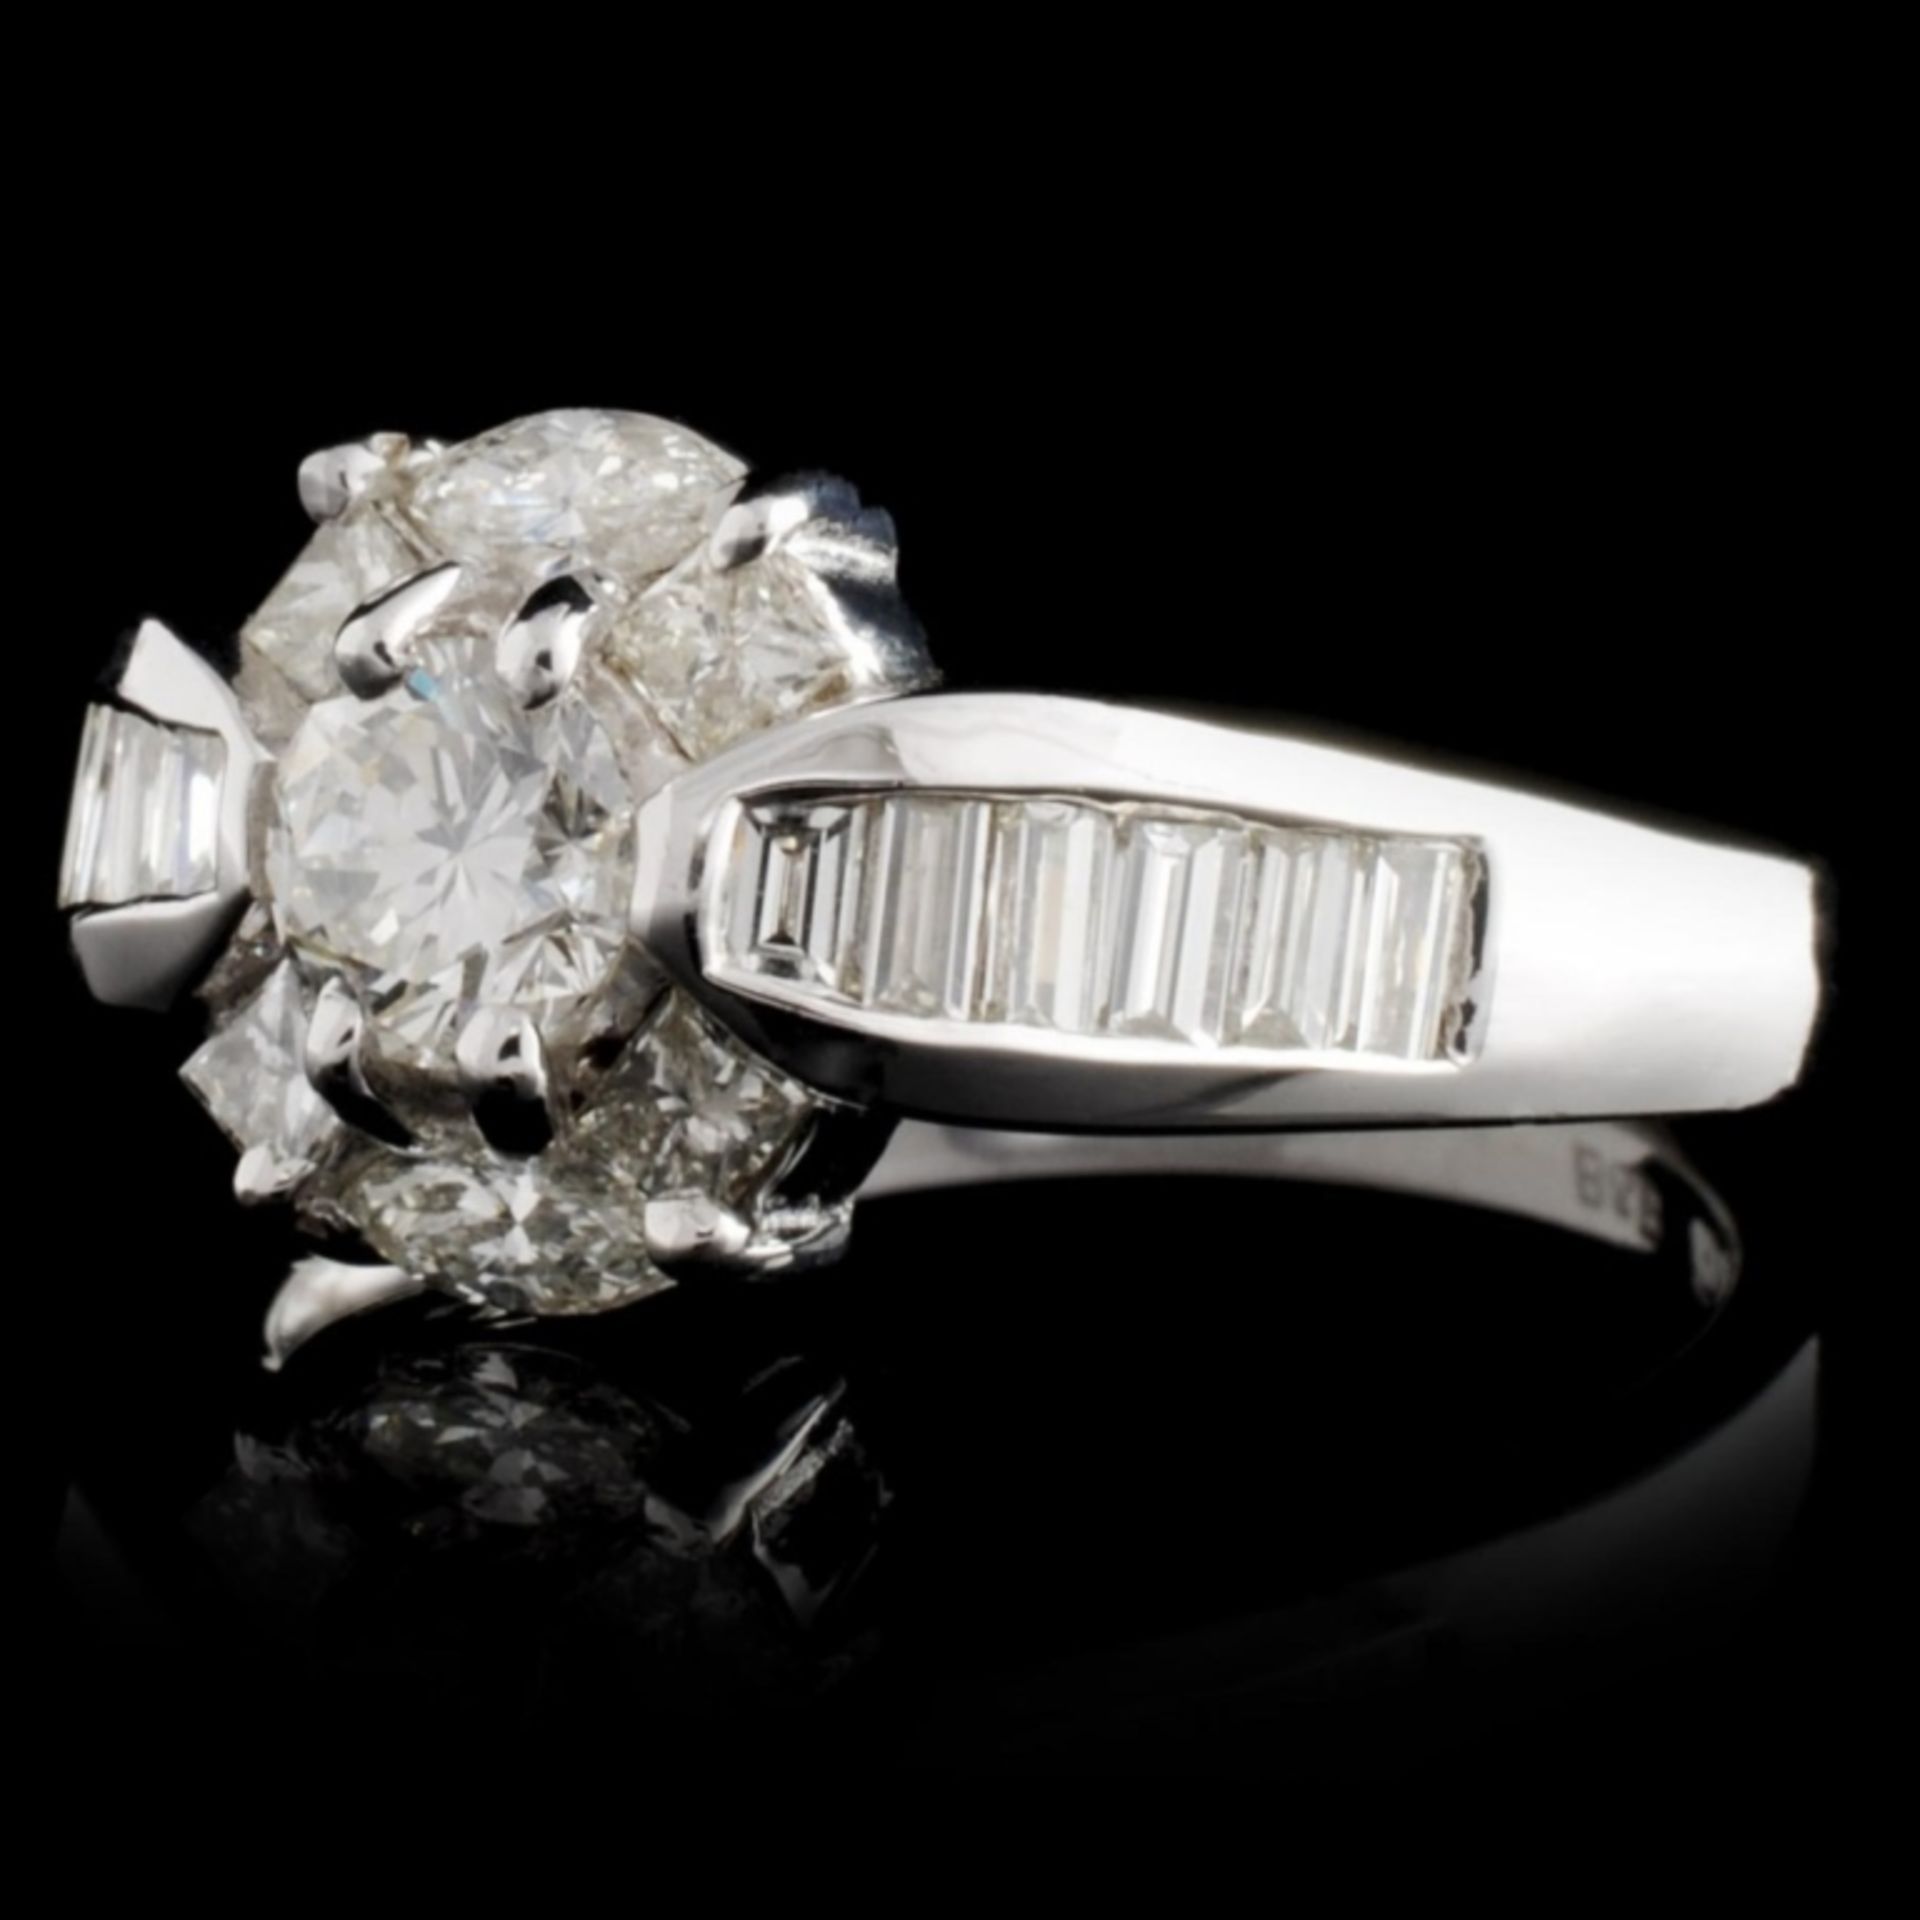 18K White Gold 1.60ctw Diamond Ring - Image 2 of 4